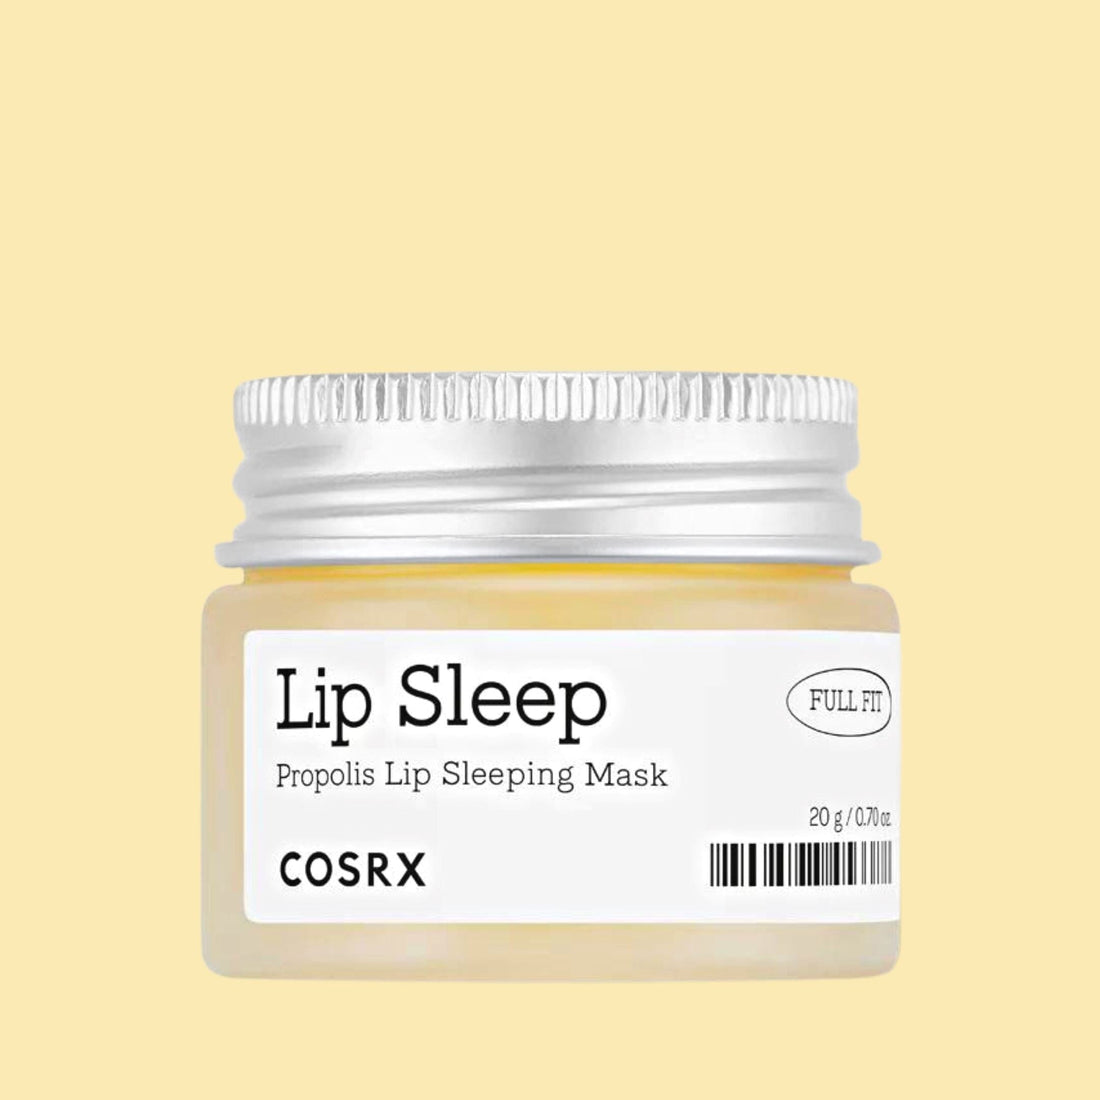 COSRX Full Fit Propolis Lip Sleep Mask 20g Skin Care COSRX ORION XO Sri Lanka